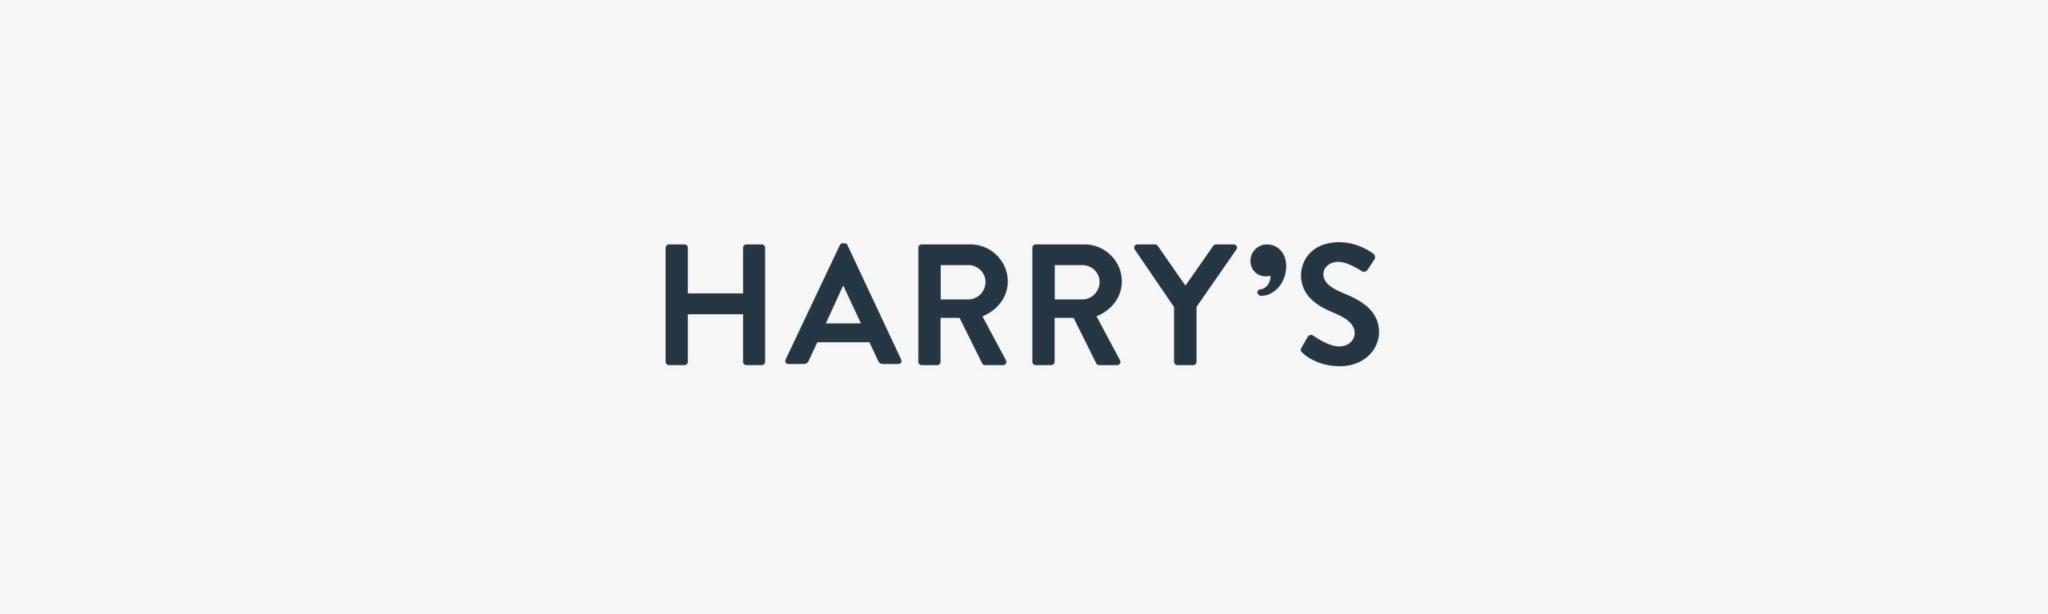 Harry’s (USA)